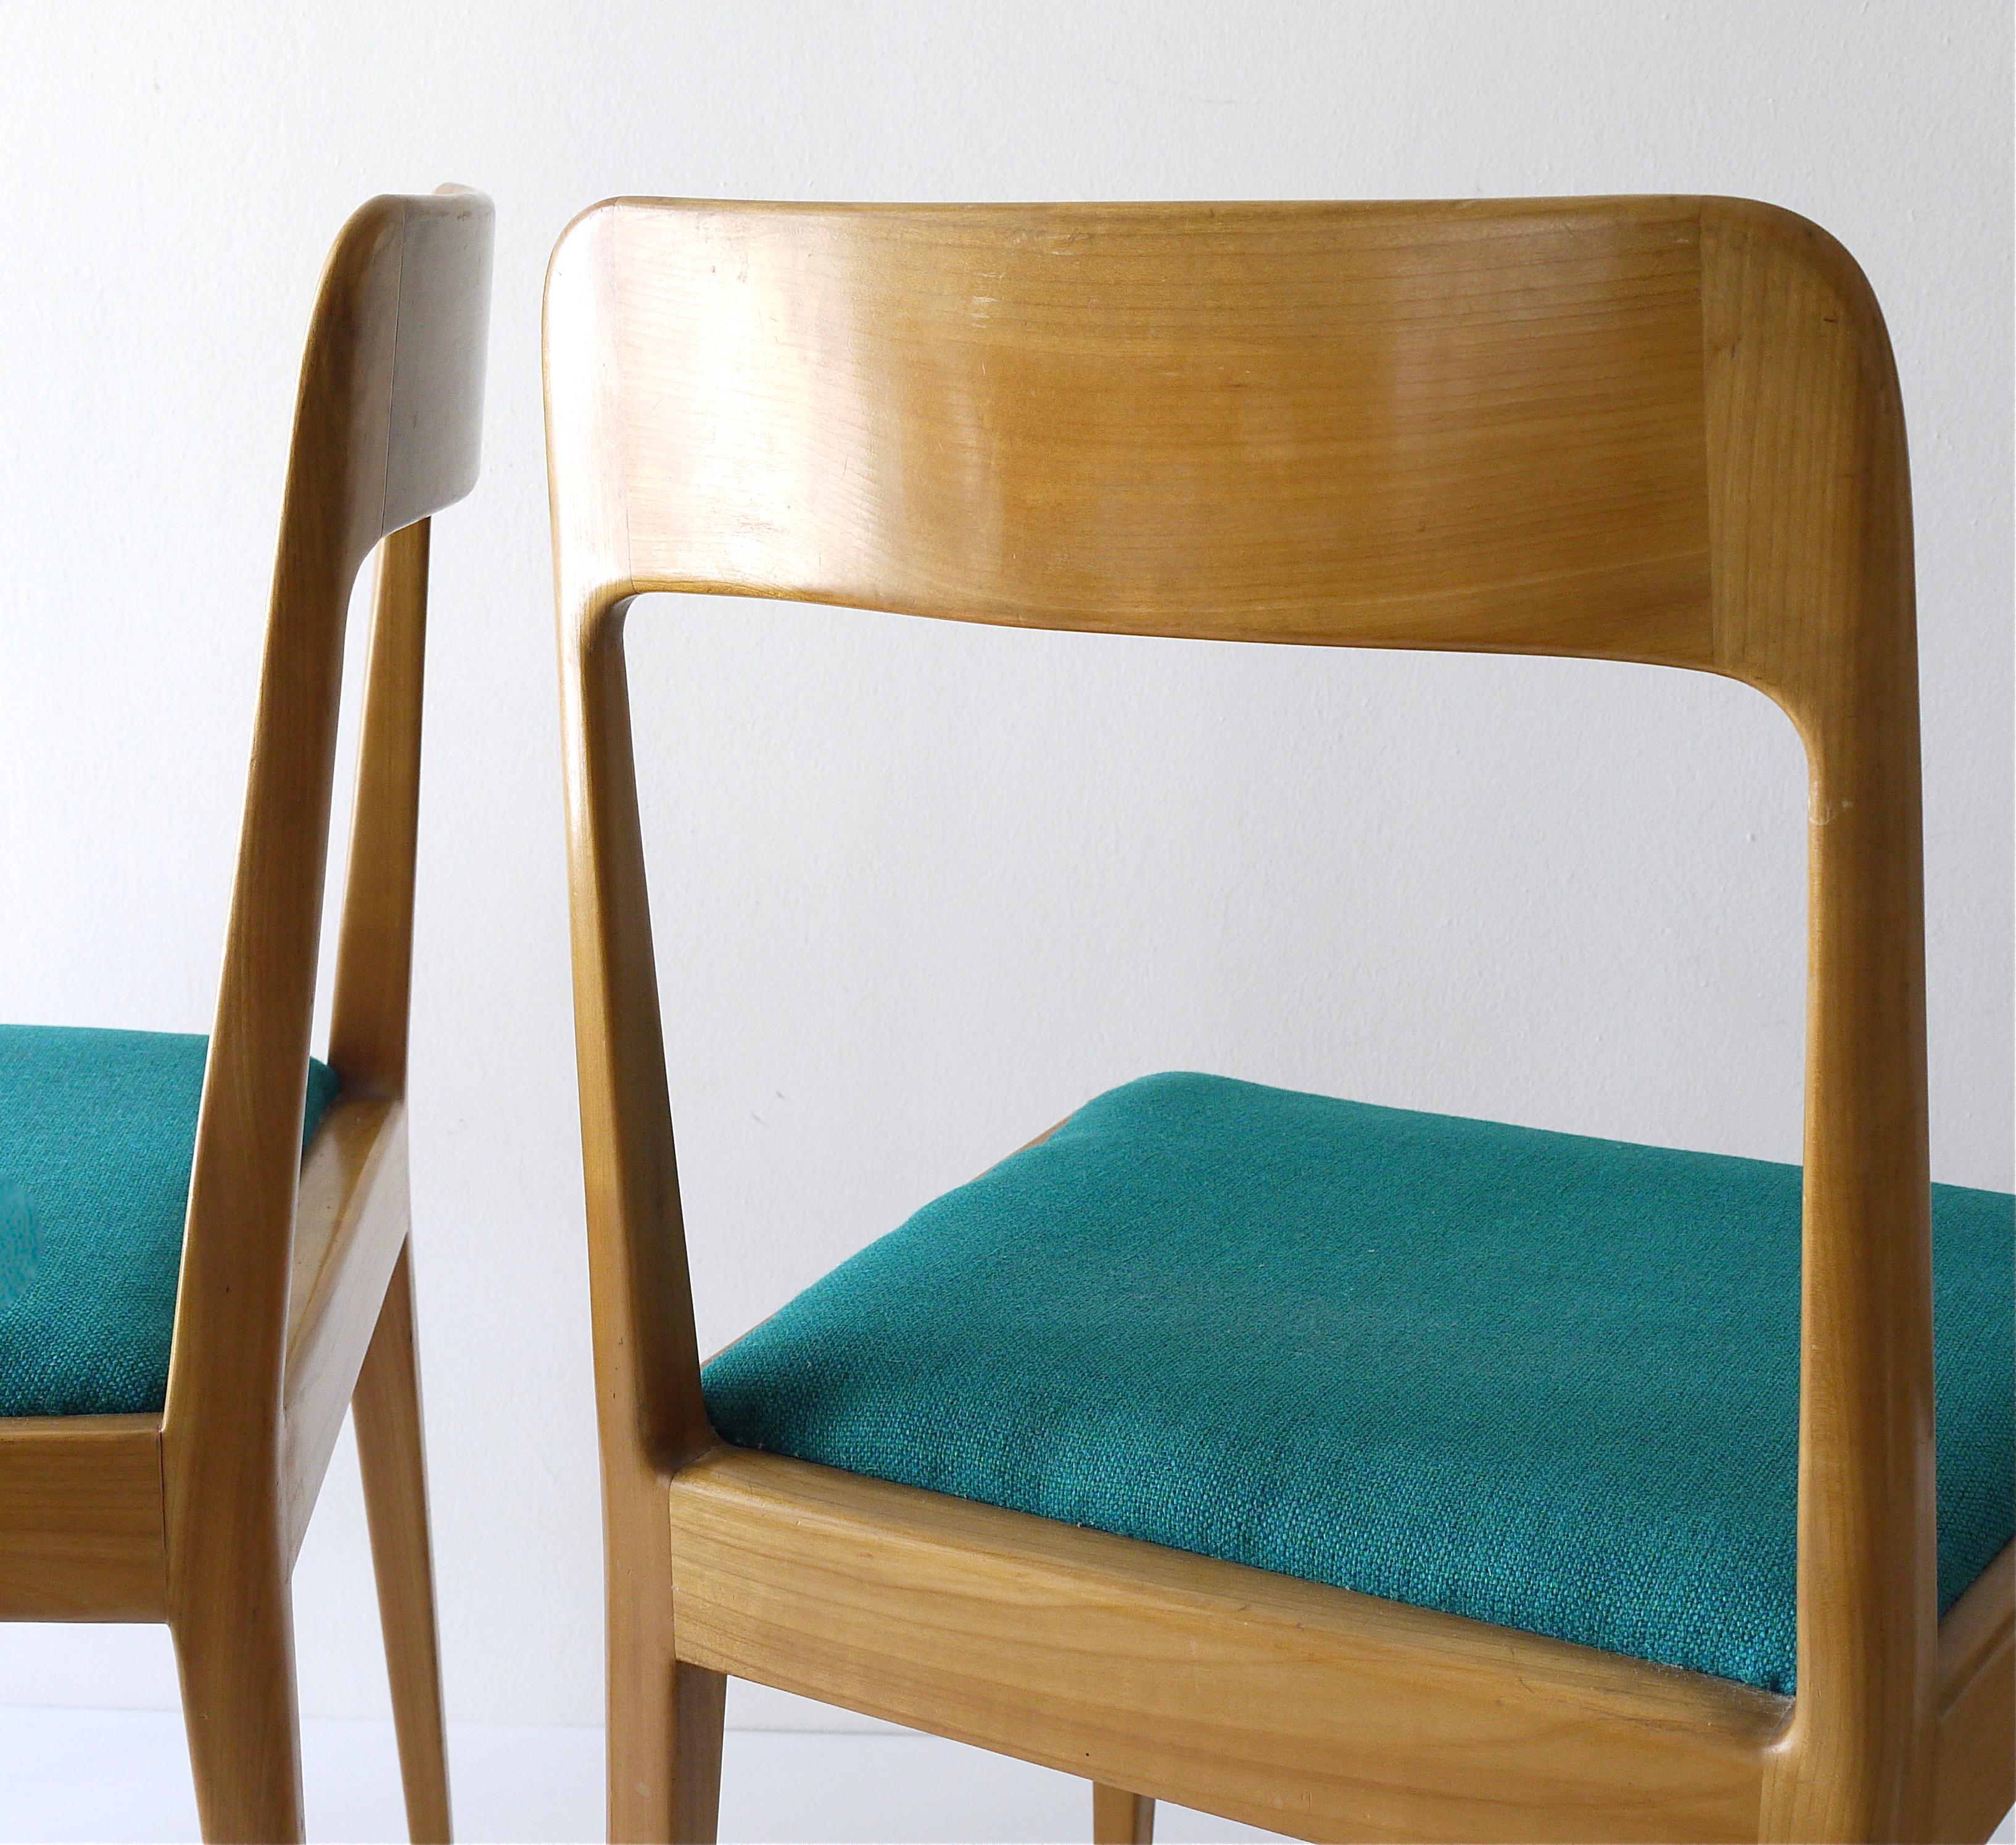 Four Carl Aubock Midcentury Walnut Chairs A7, Vienna, Austria, 1950s For Sale 14